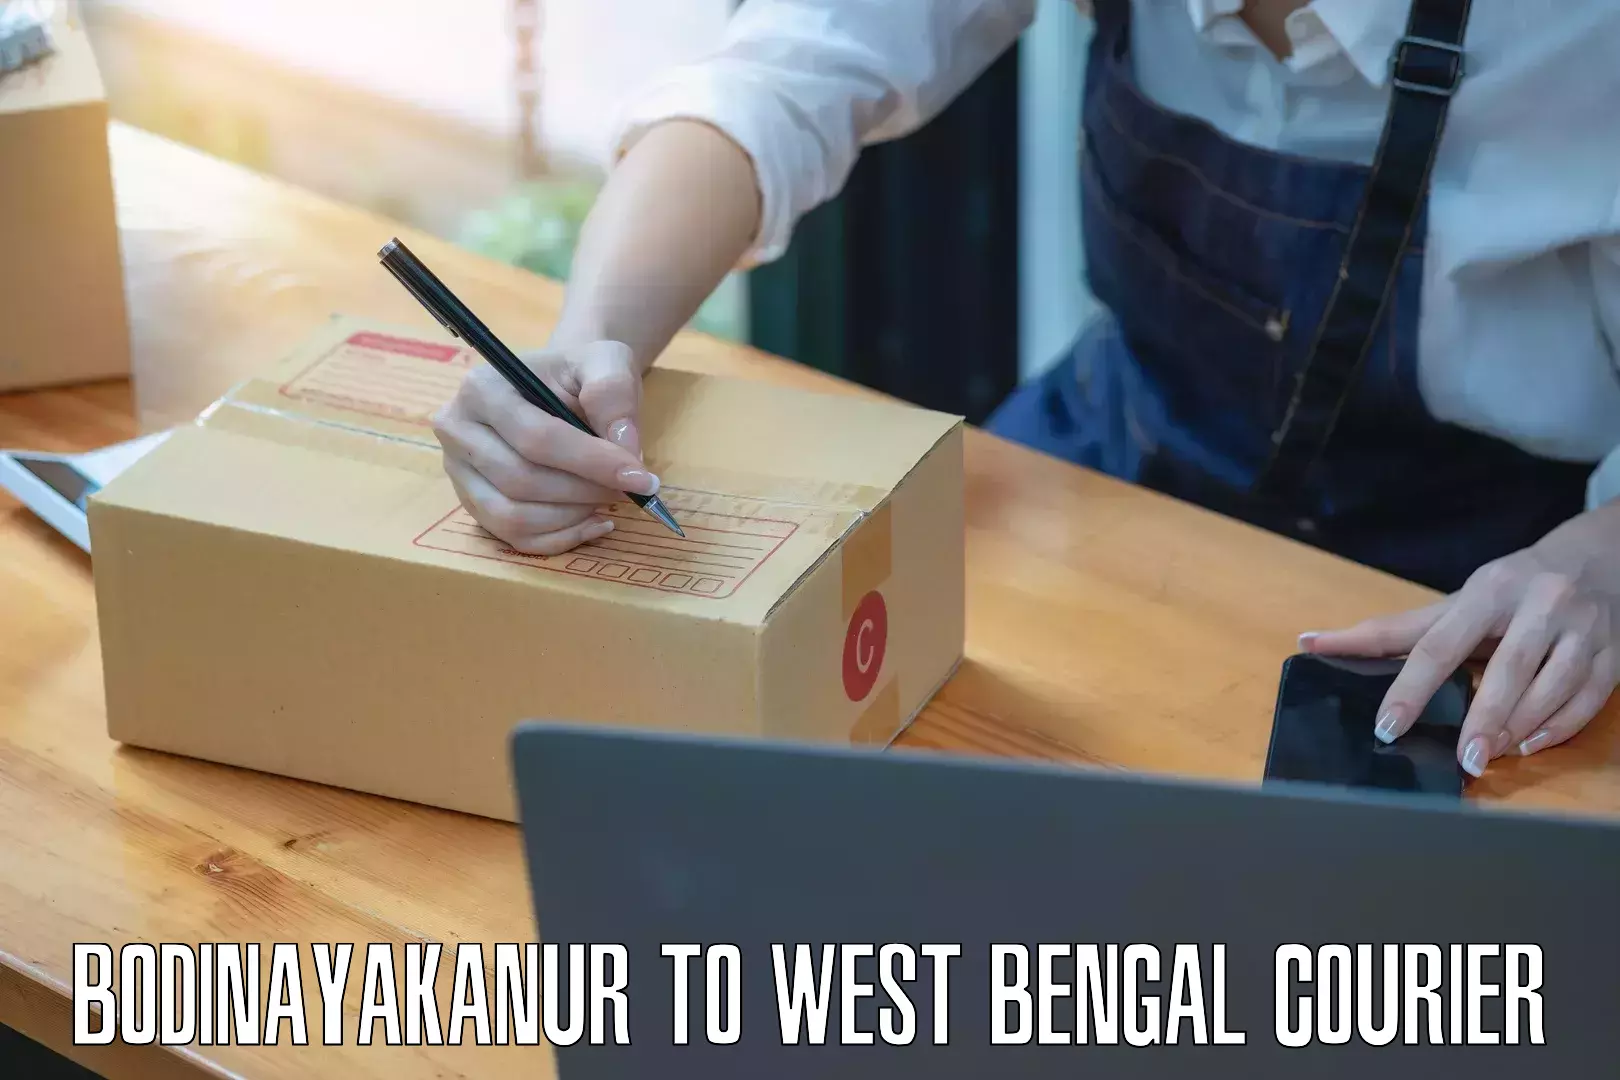 Courier service partnerships Bodinayakanur to West Bengal